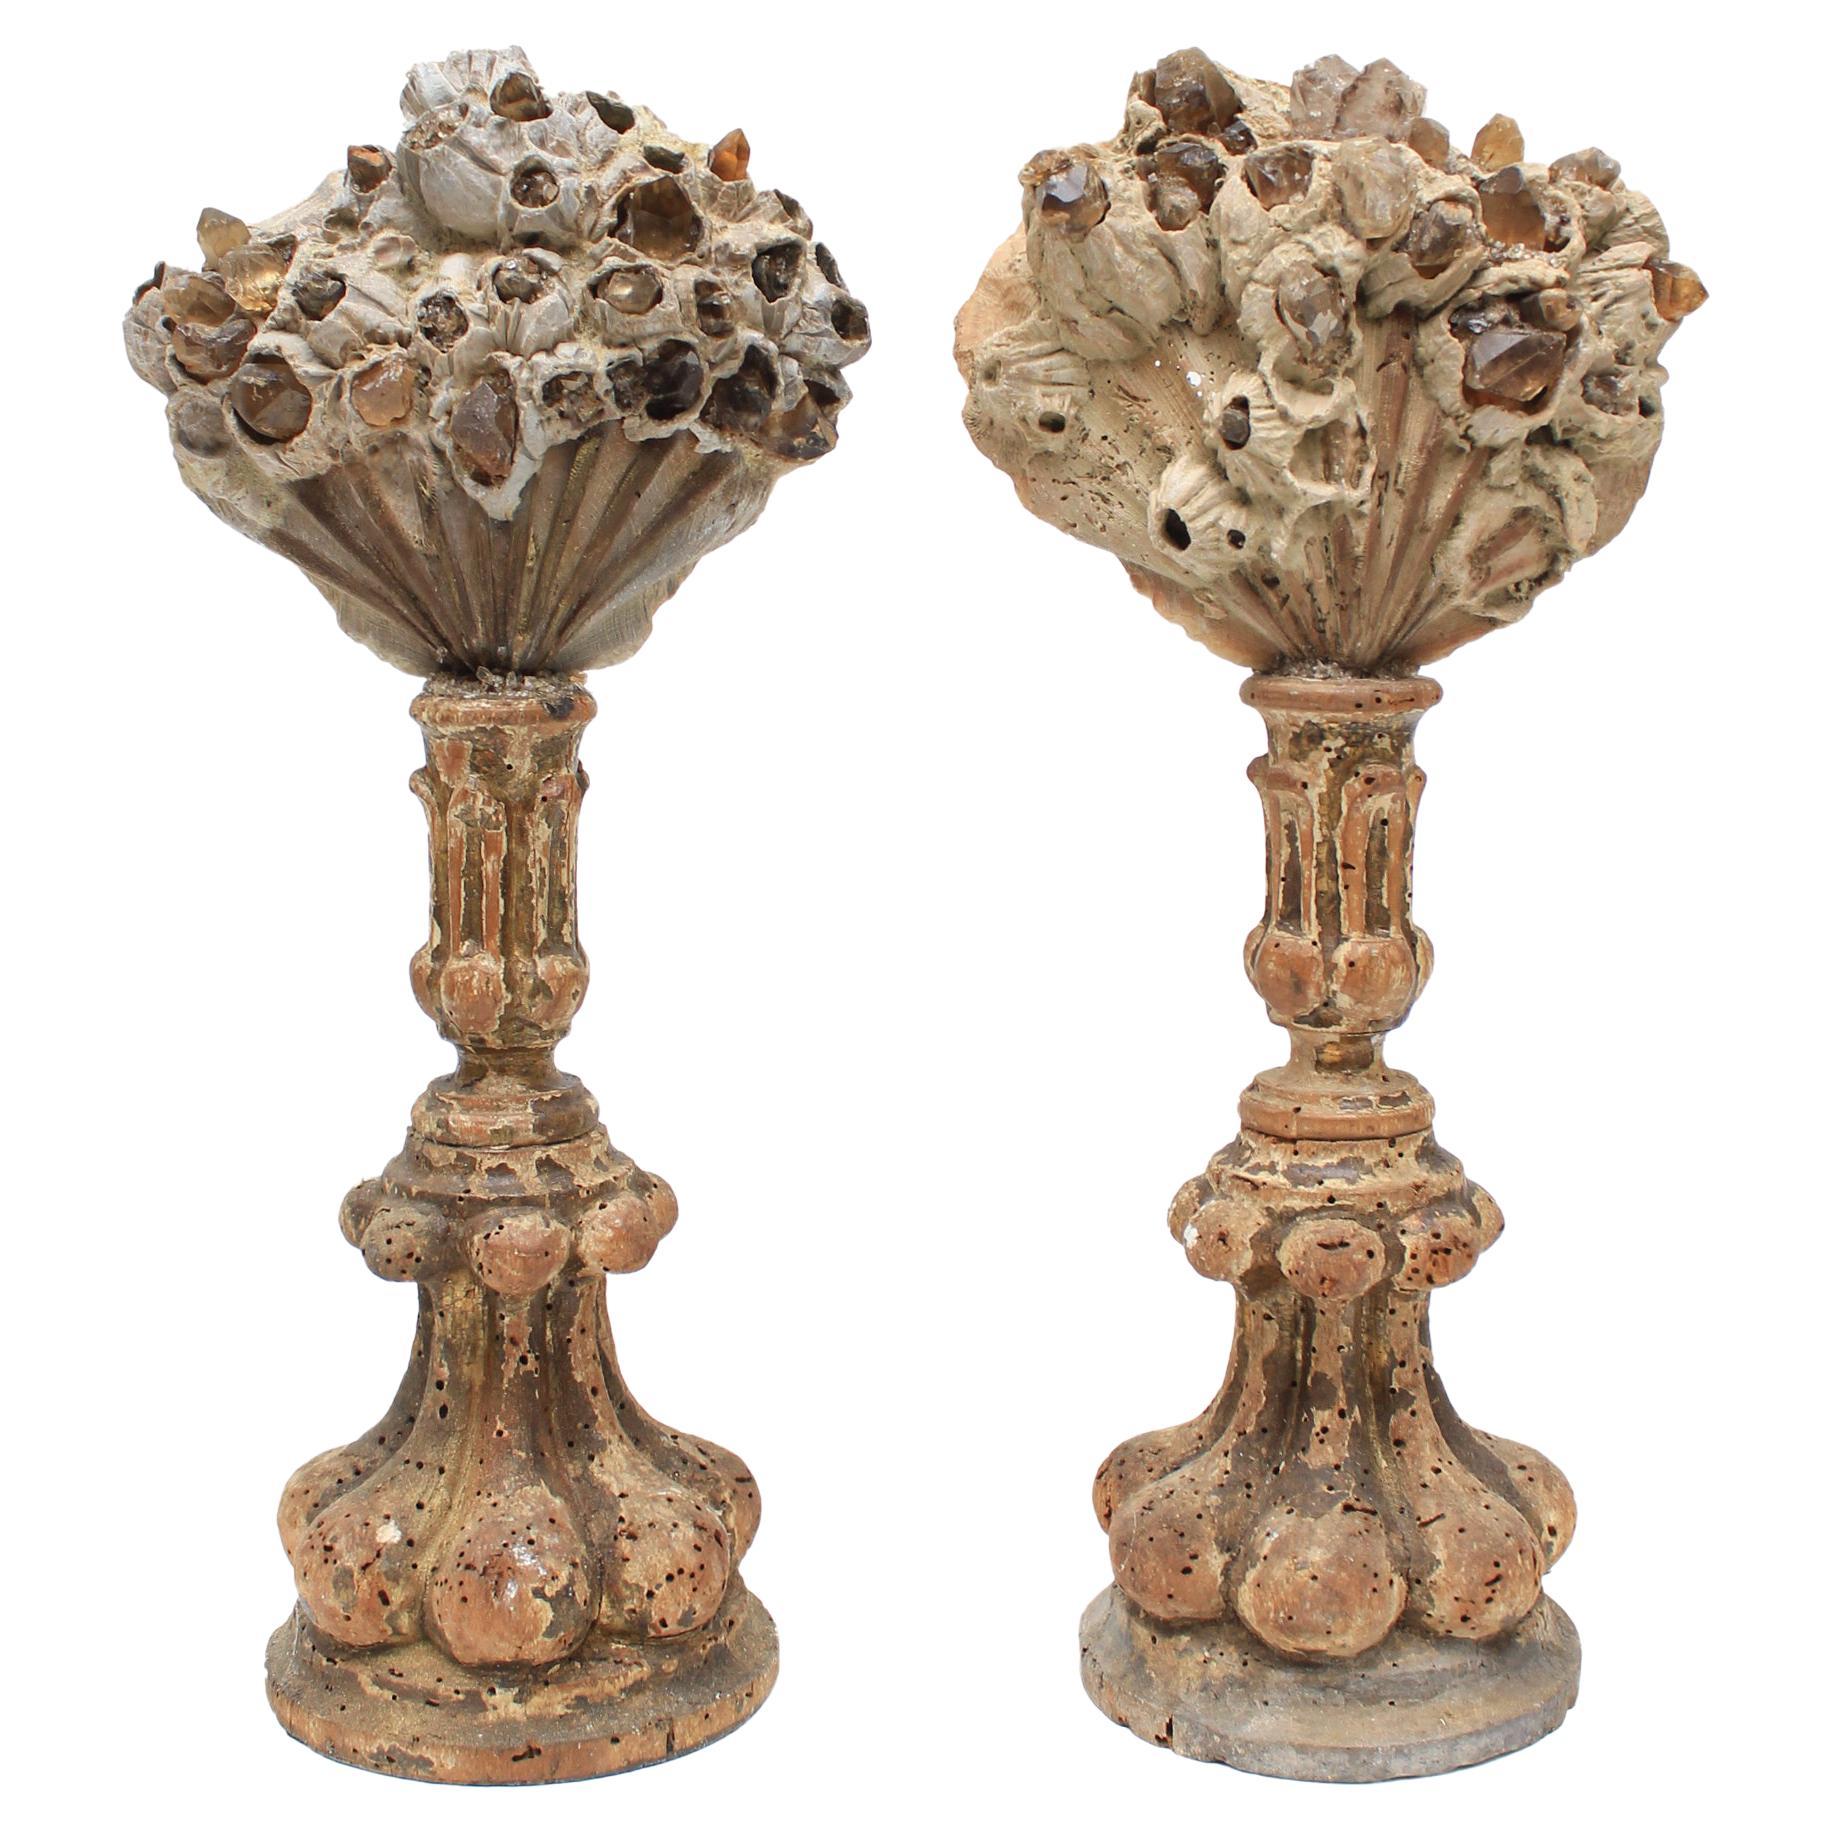 Pair of 17th Century Italian Candlesticks with Chesapecten Shells & Smoky Quartz